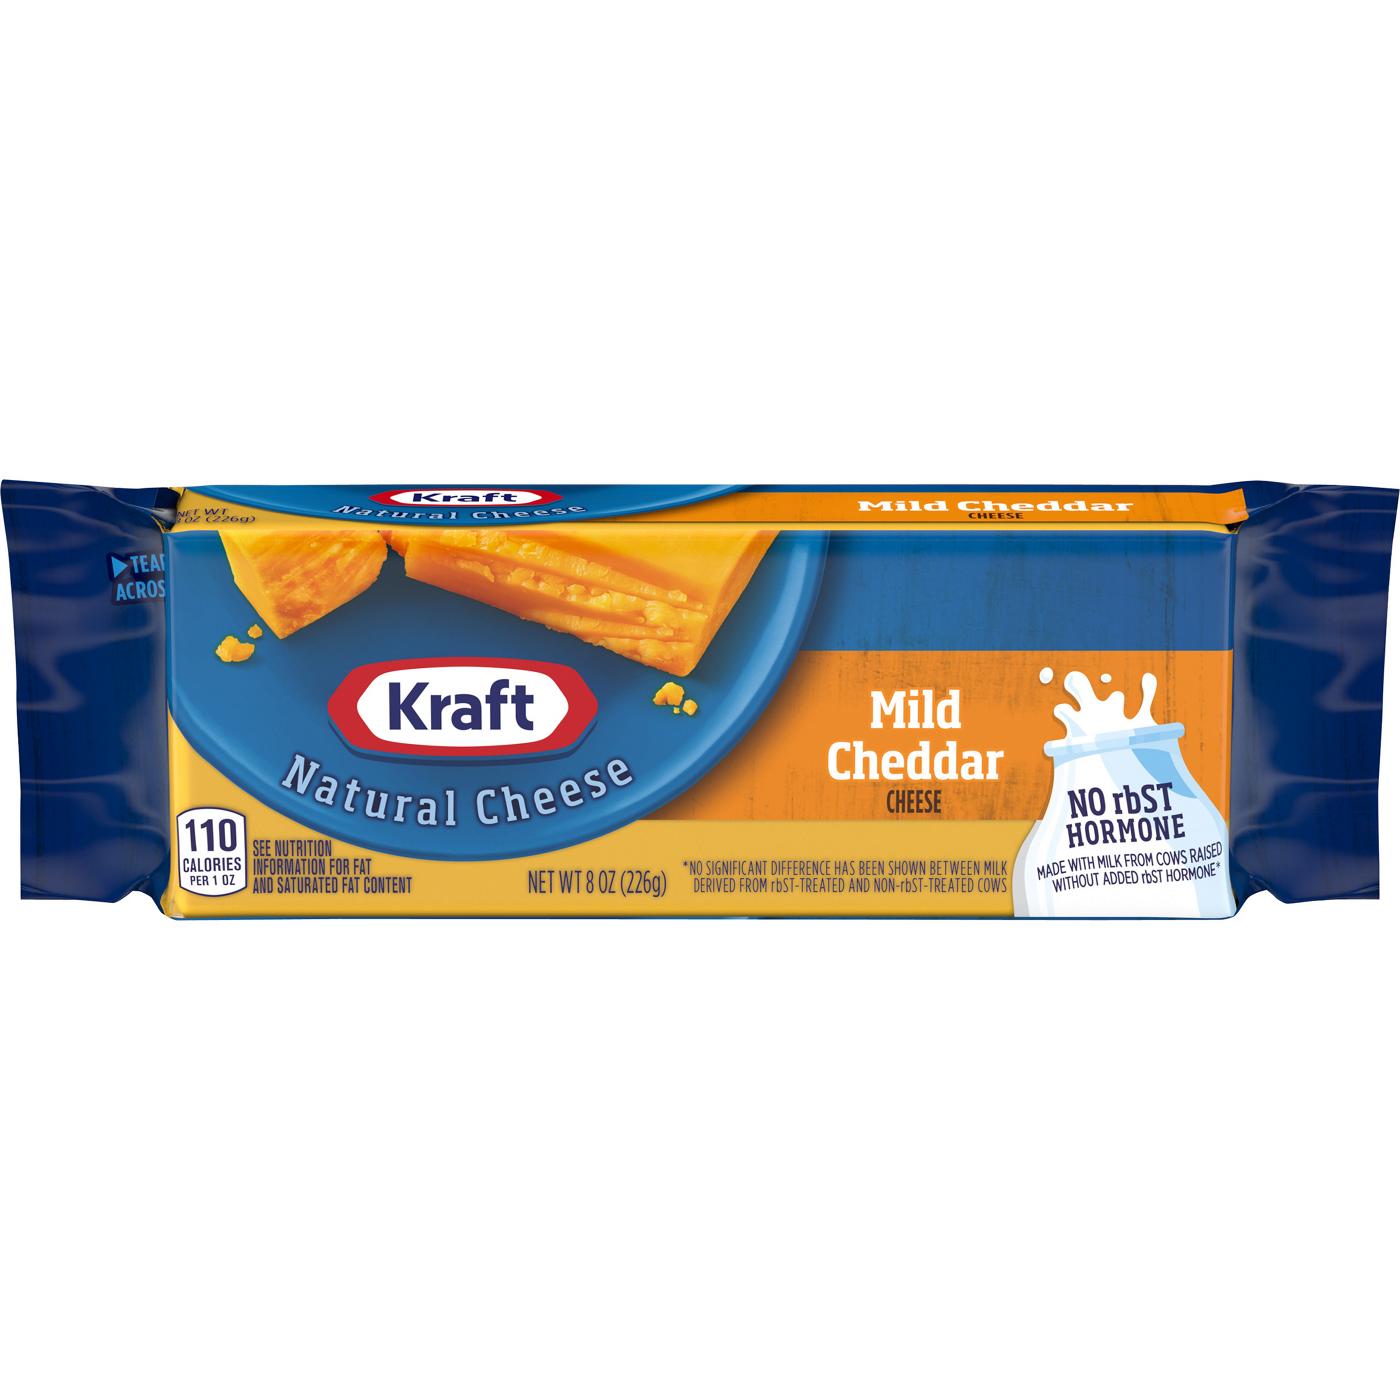 Kraft Mild Cheddar Cheese; image 1 of 2